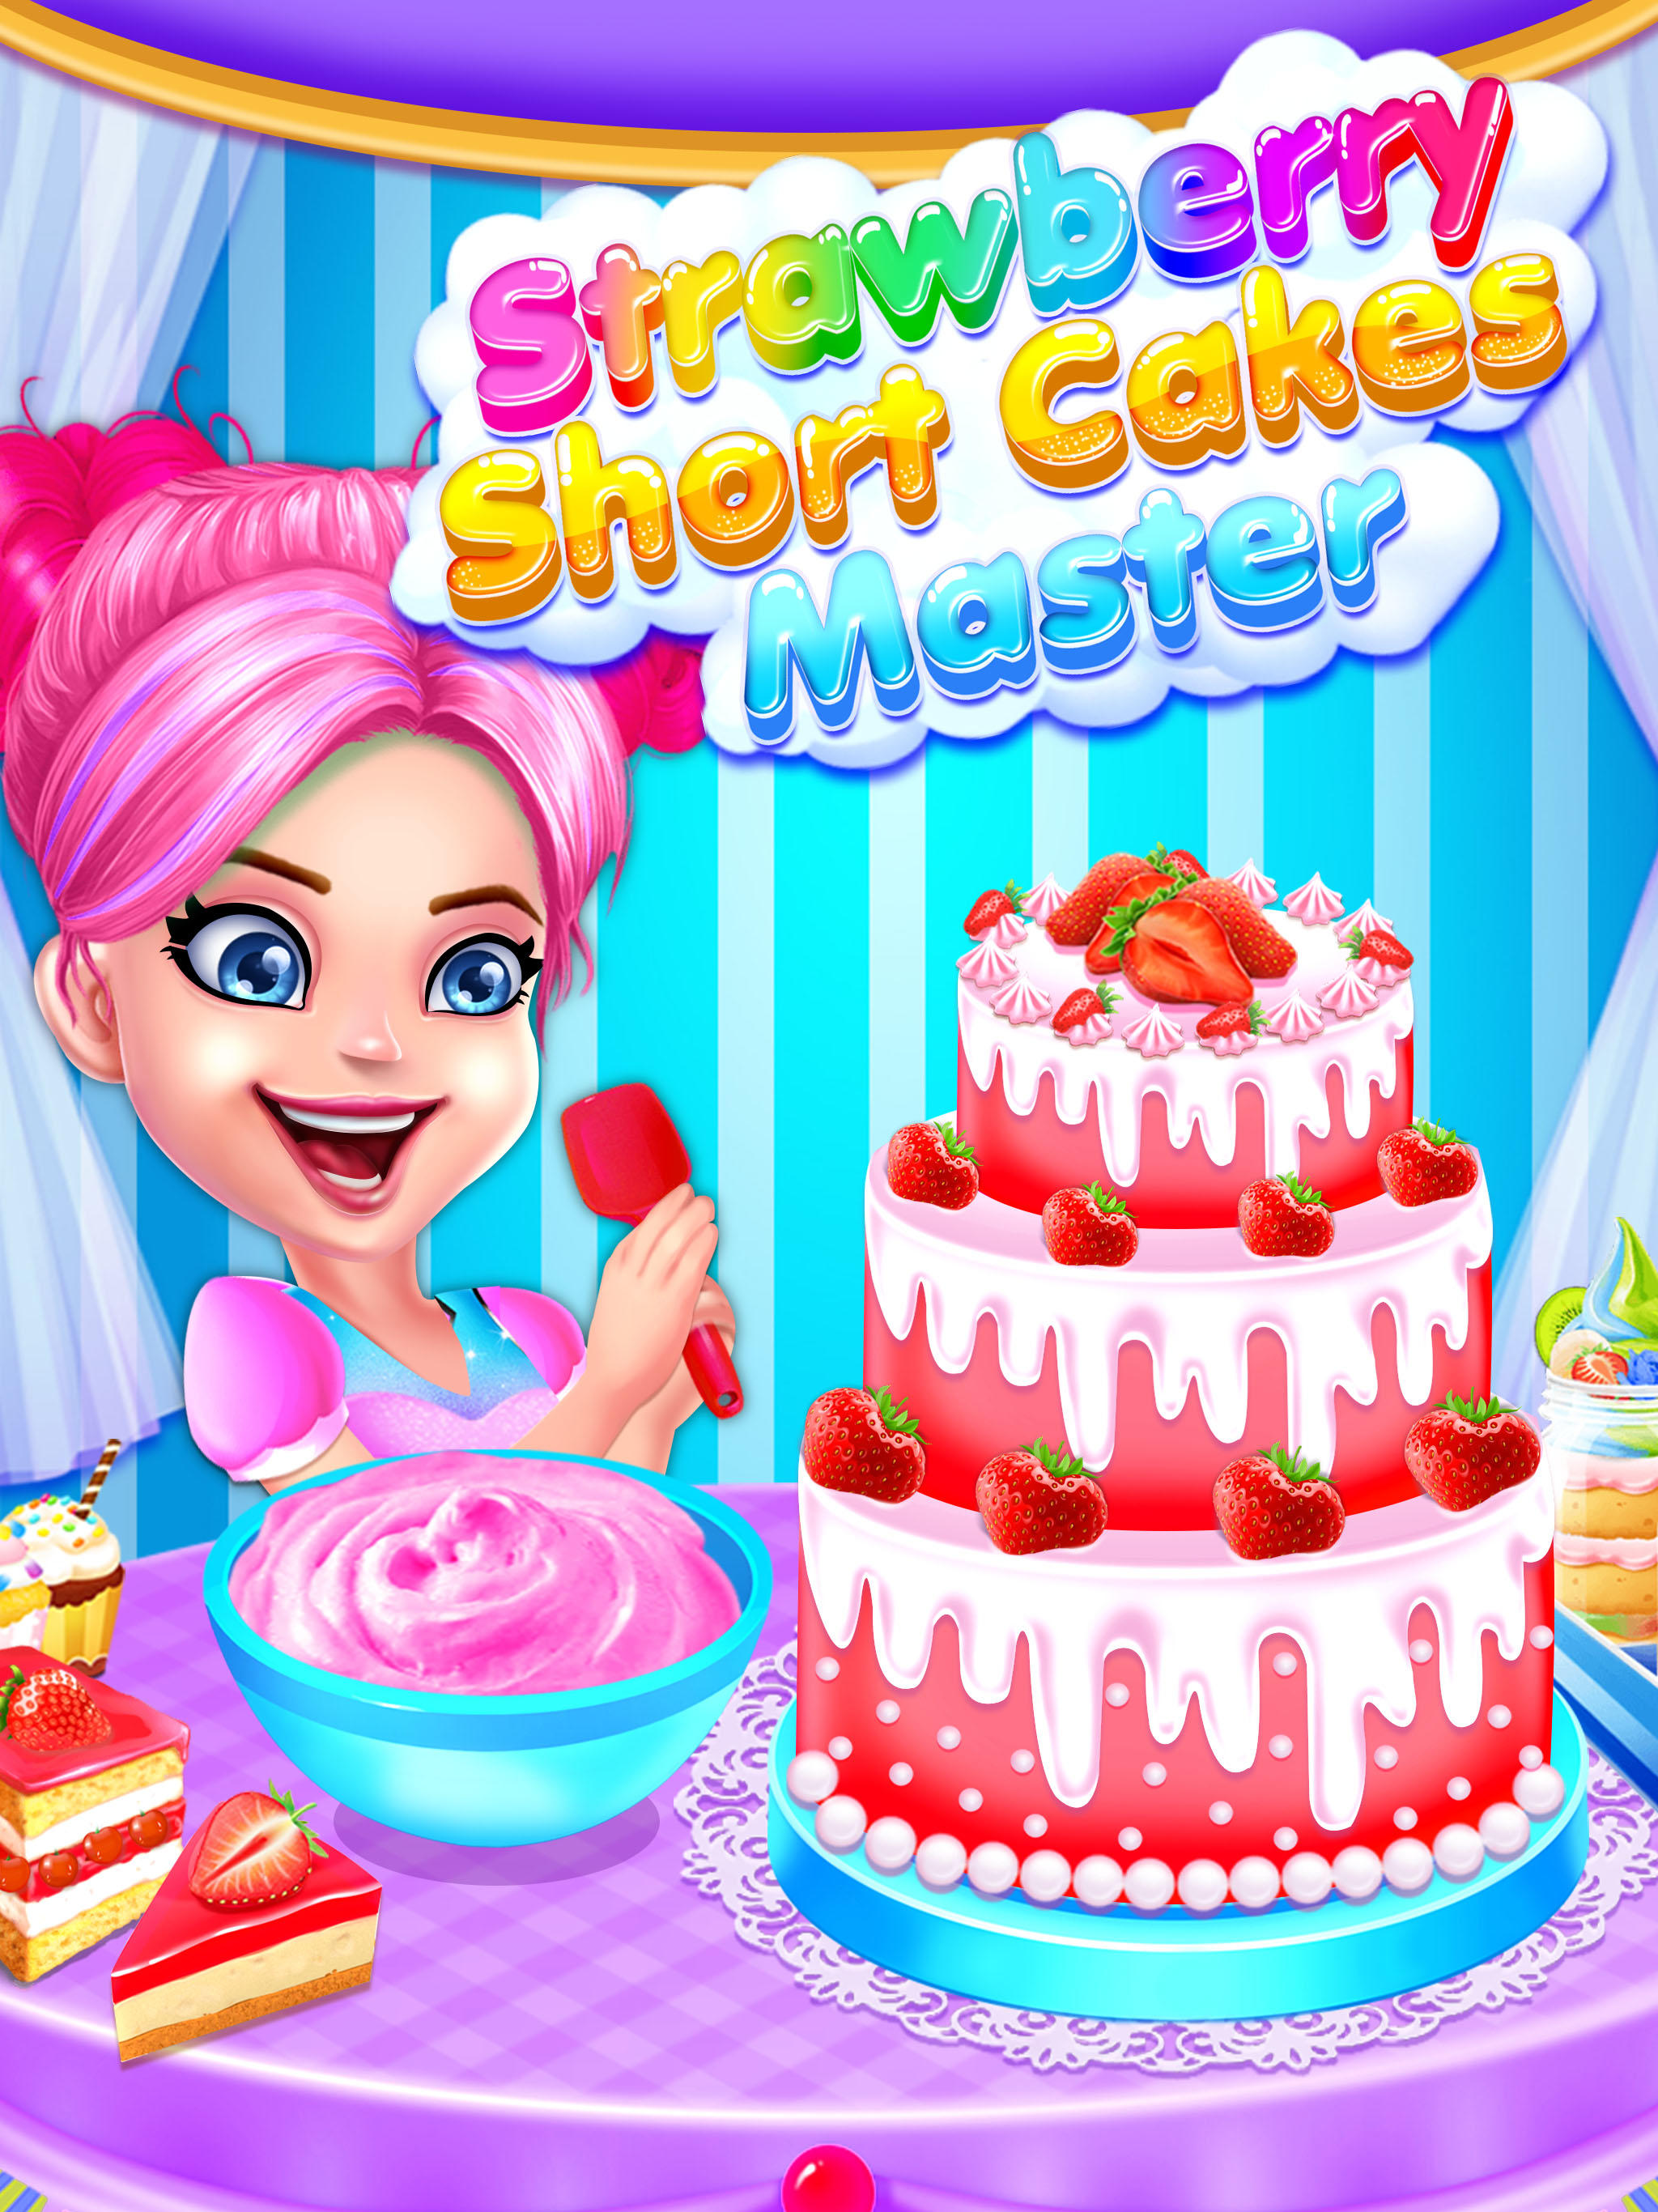 Make Cake - Baking Games by Bluebear Technologies Ltd.